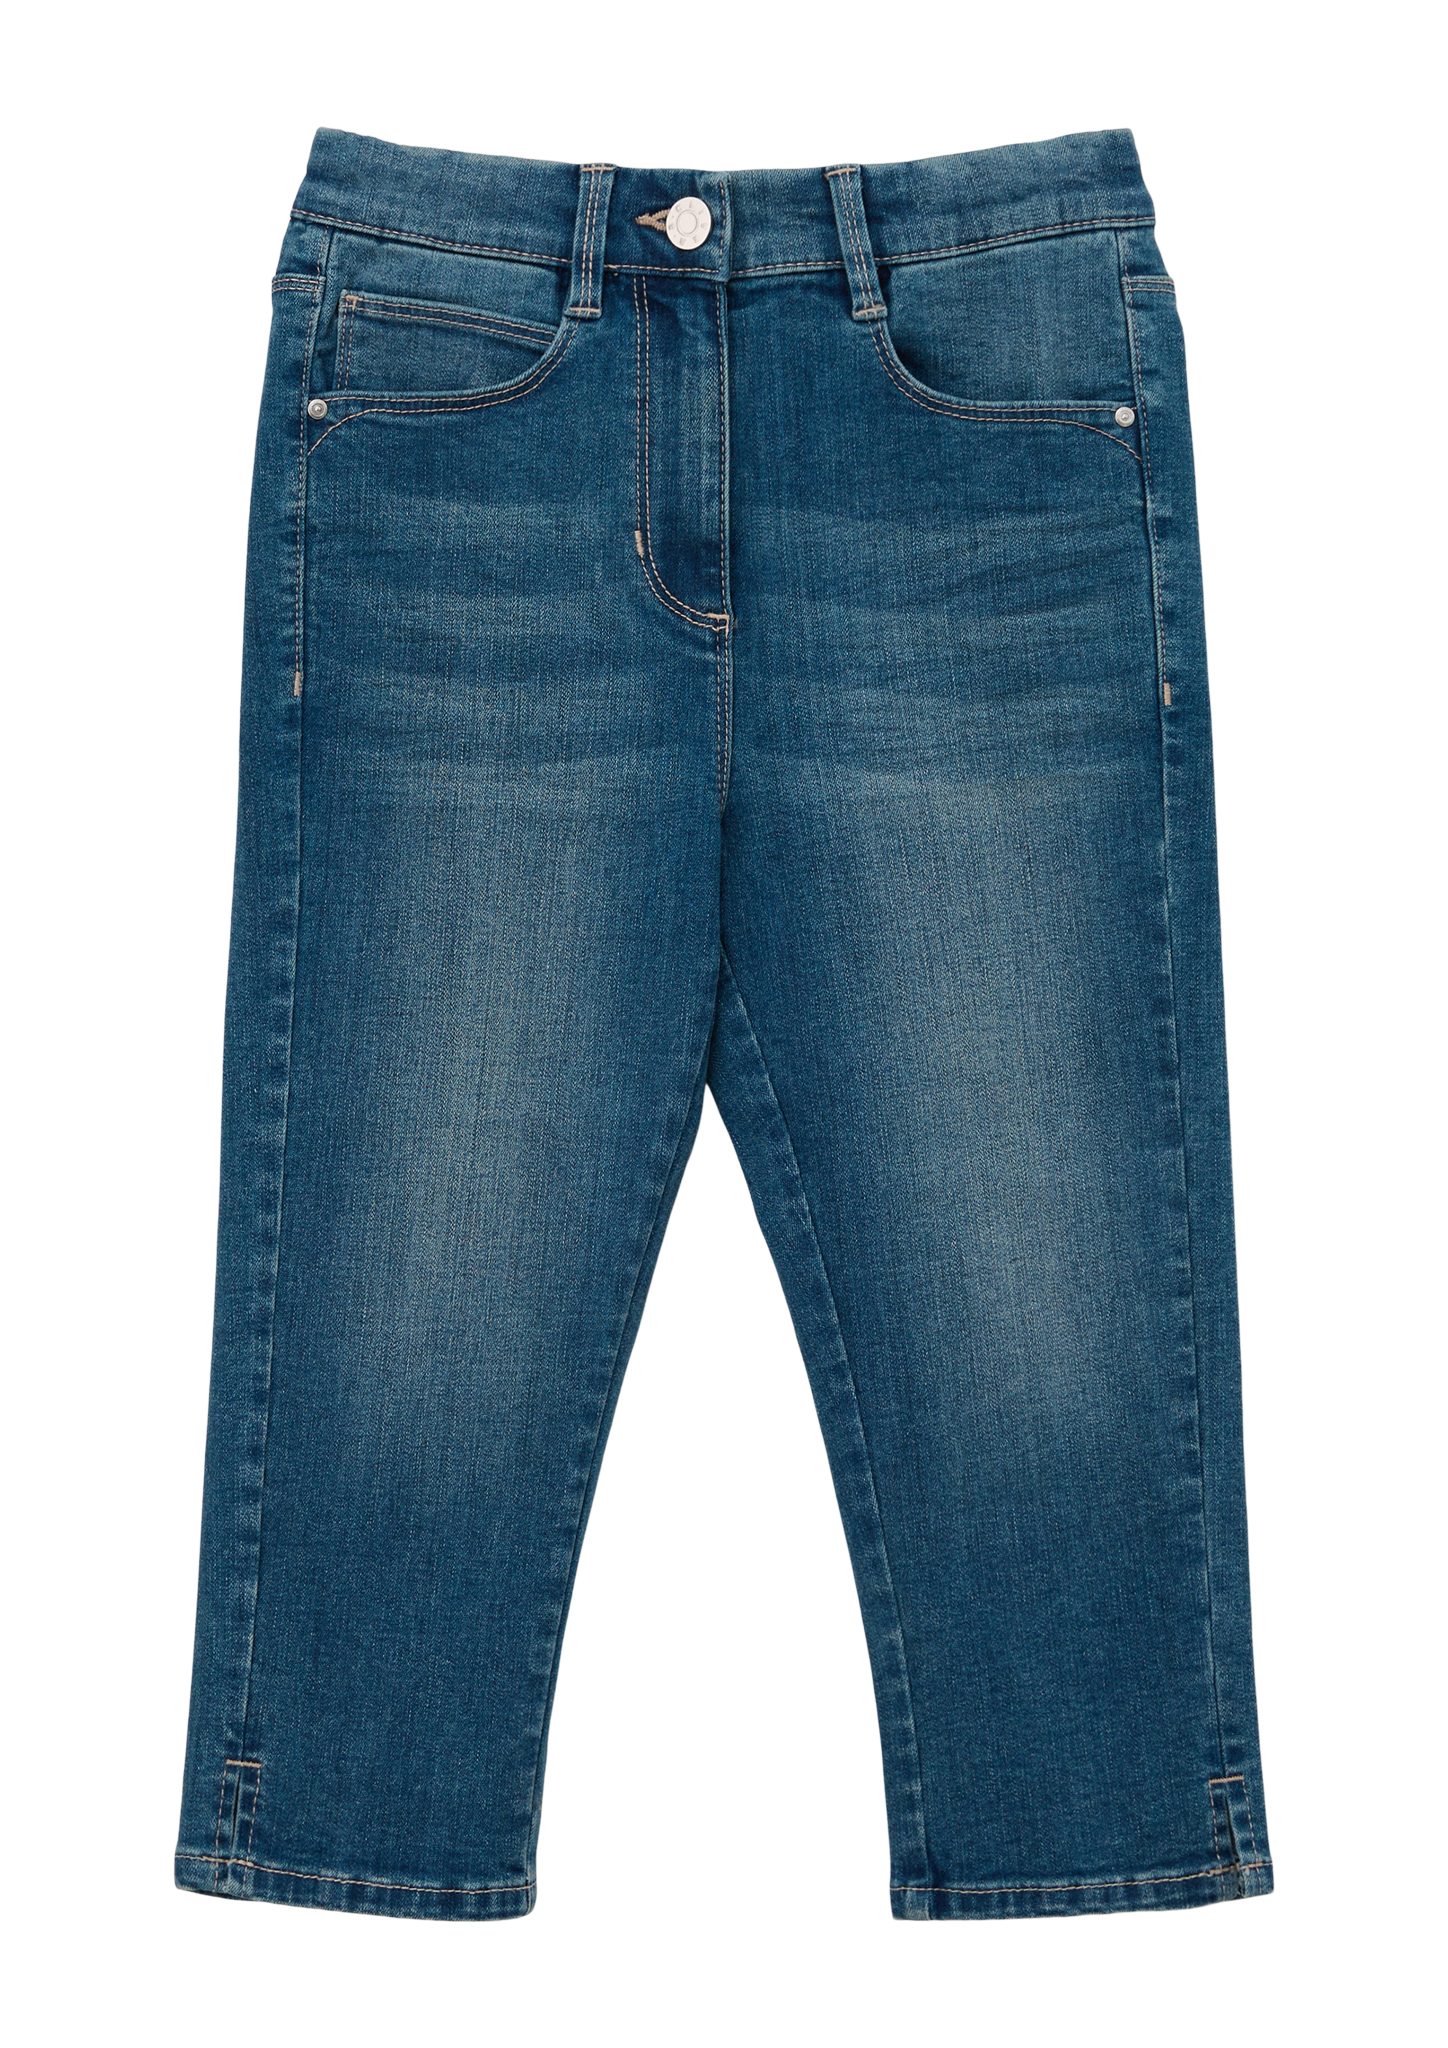 Waschung Suri / Fit Skinny / 3/4-Hose s.Oliver / Rise Leg Capri-Jeans High Skinny Skinny